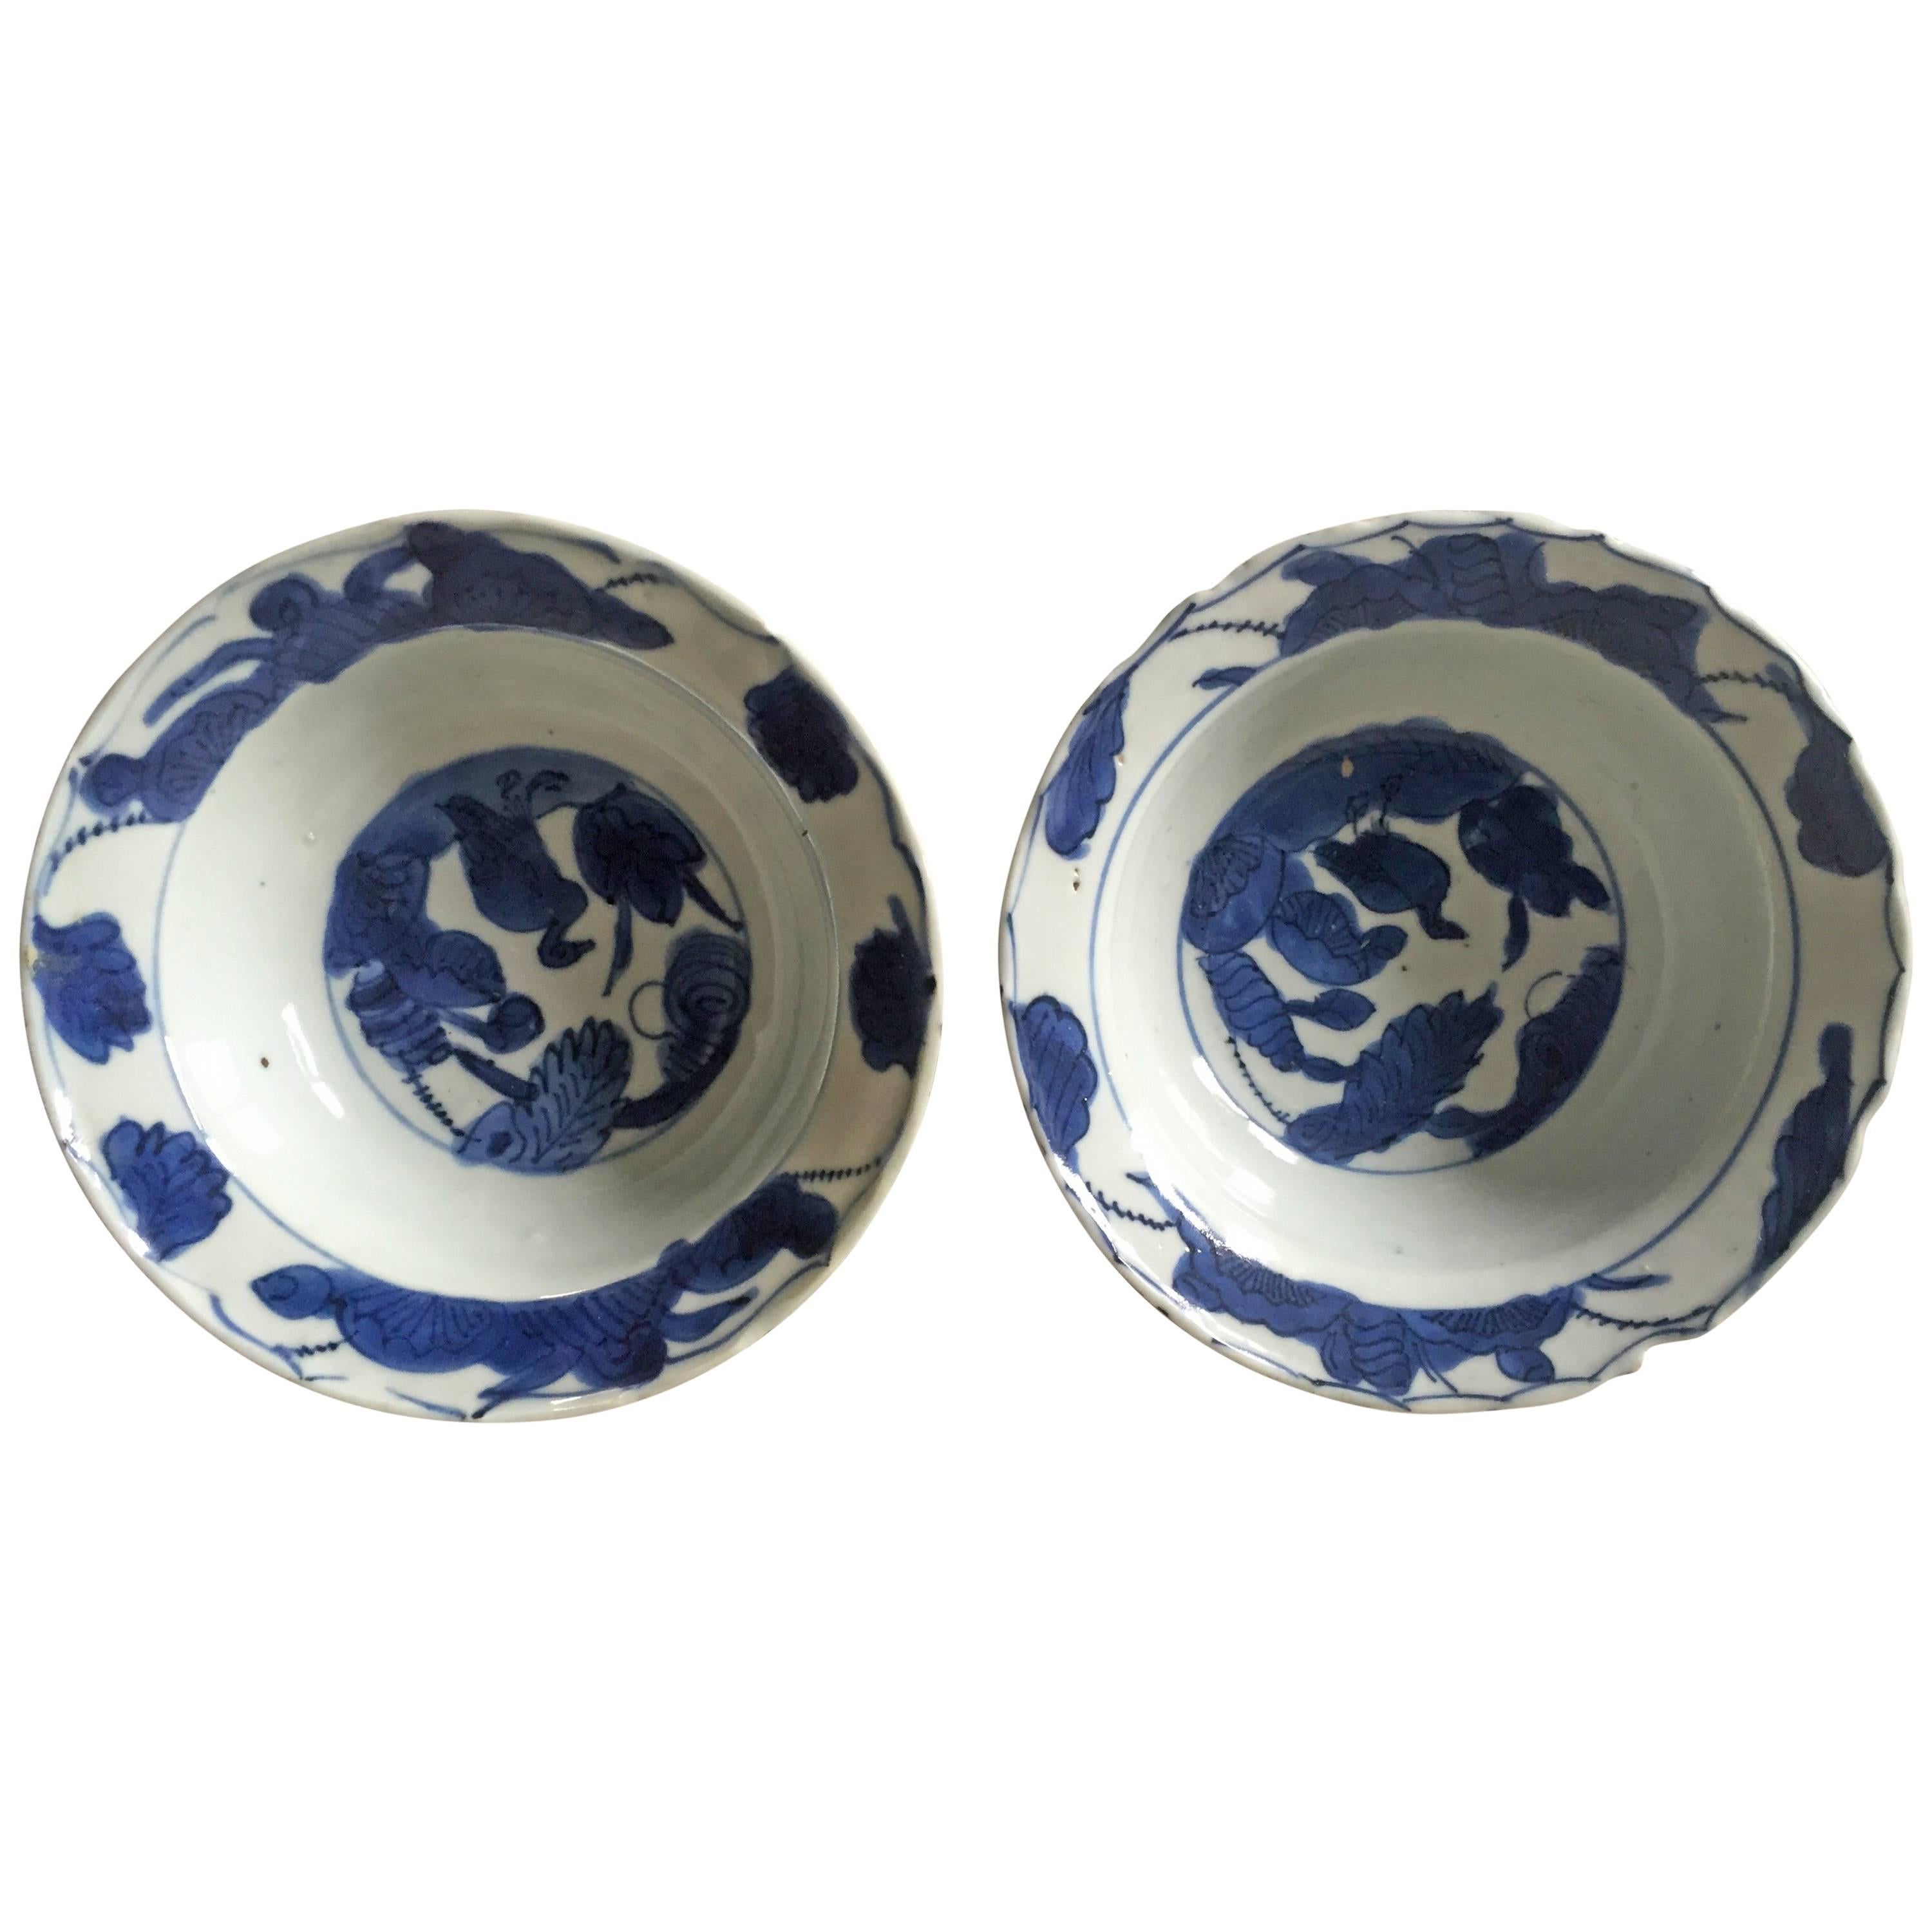 Wanli Pair of Chinese Klapmuts Bowls or Kraak Bowls For Sale